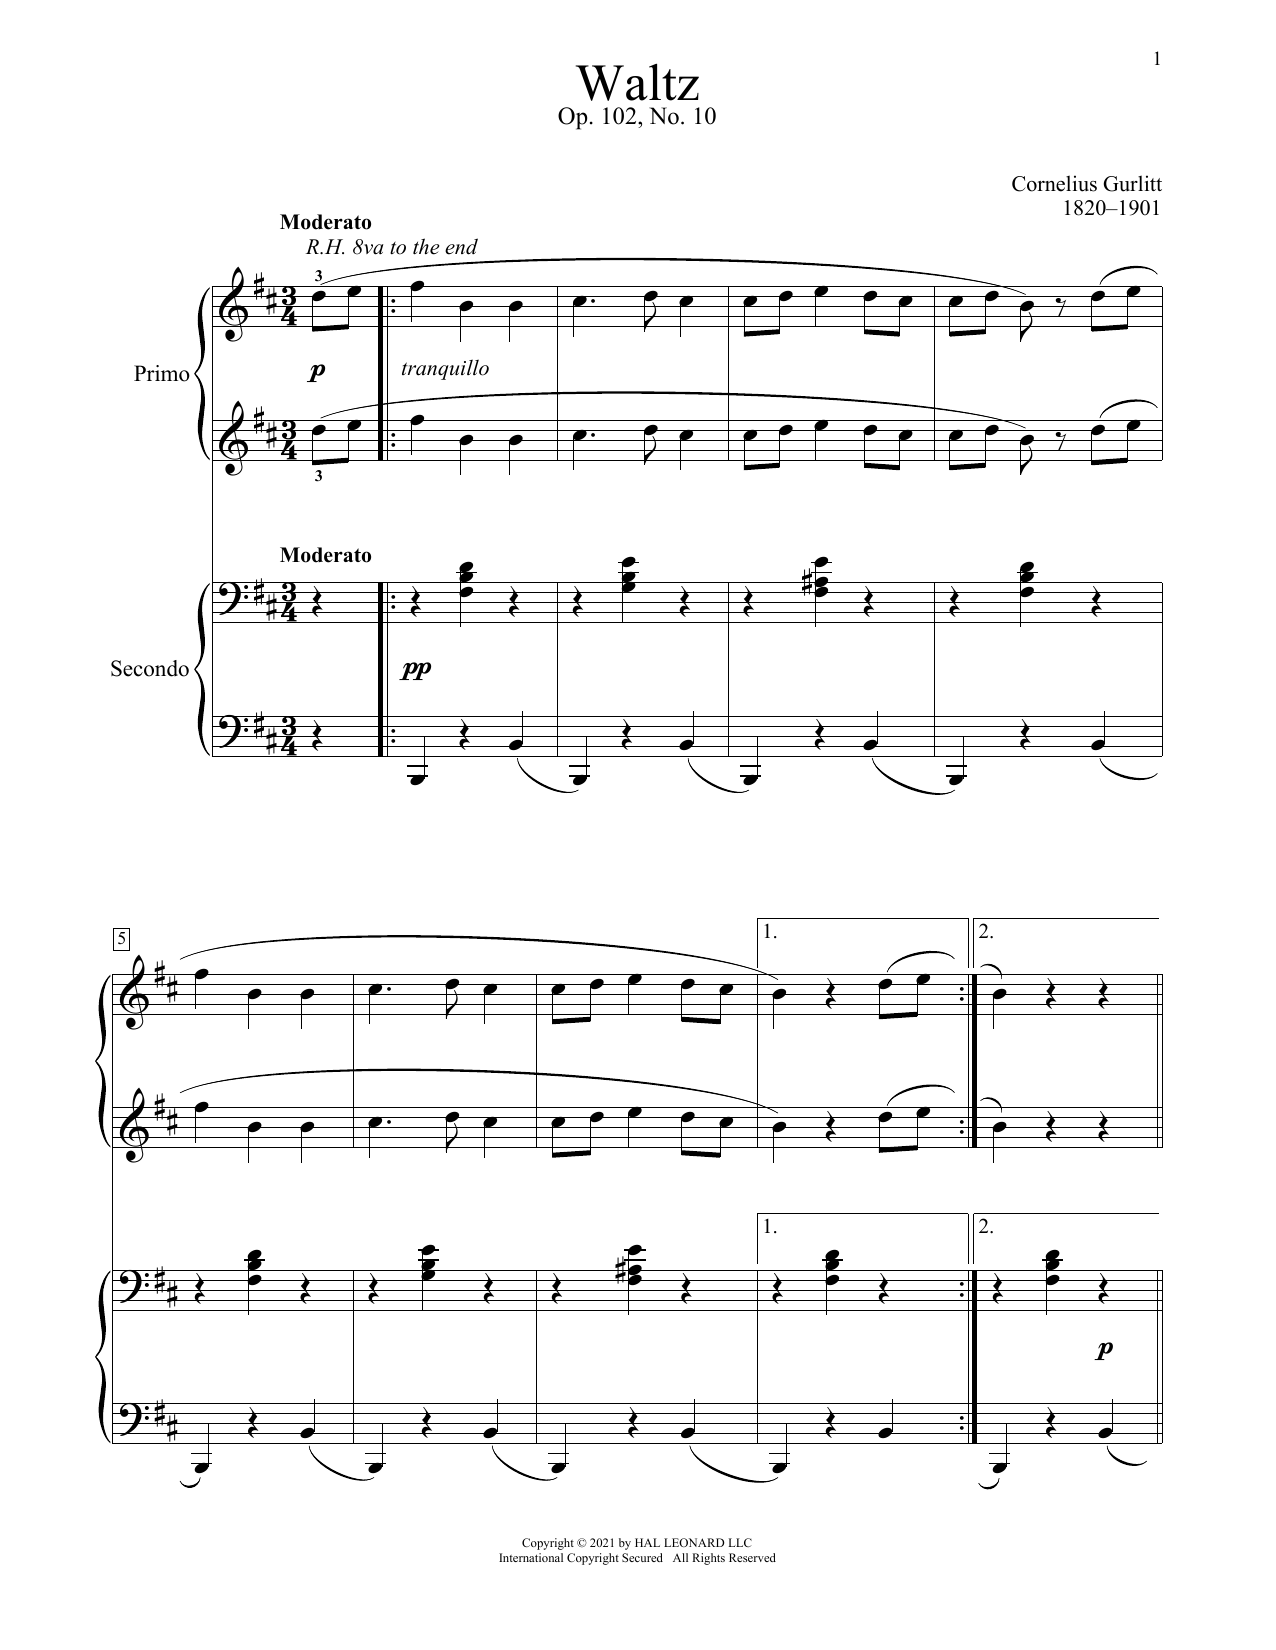 Cornelius Gurlitt Waltz, Op. 102, No. 10 Sheet Music Notes & Chords for Piano Duet - Download or Print PDF